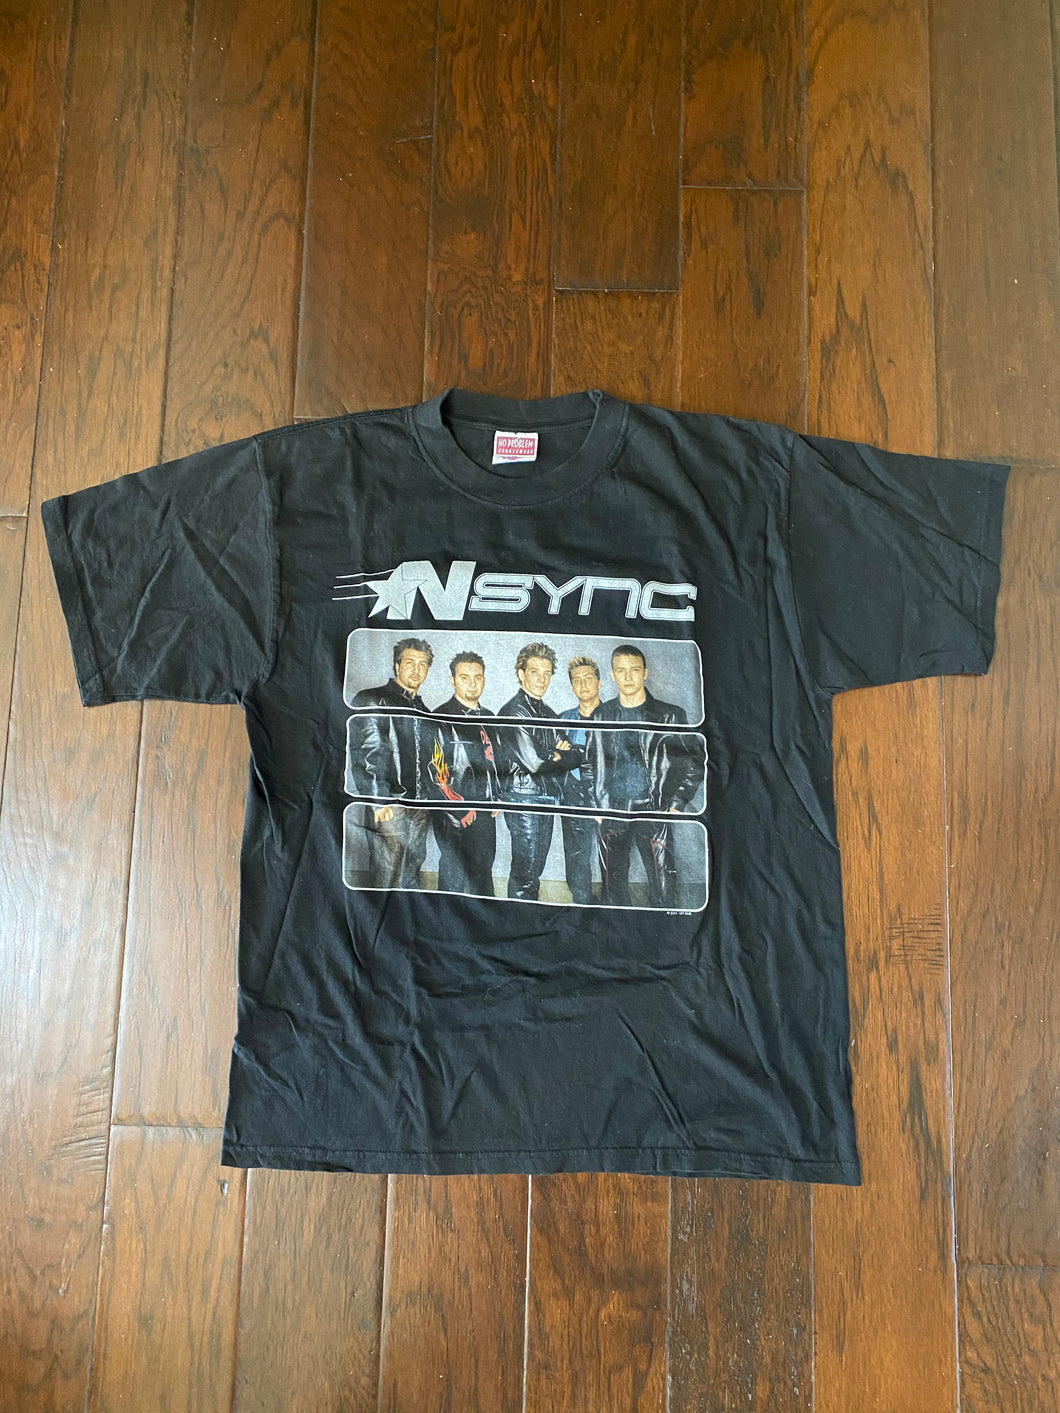 NSYNC 2001 “PopOdyssey Tour” Vintage Distressed T-shirt